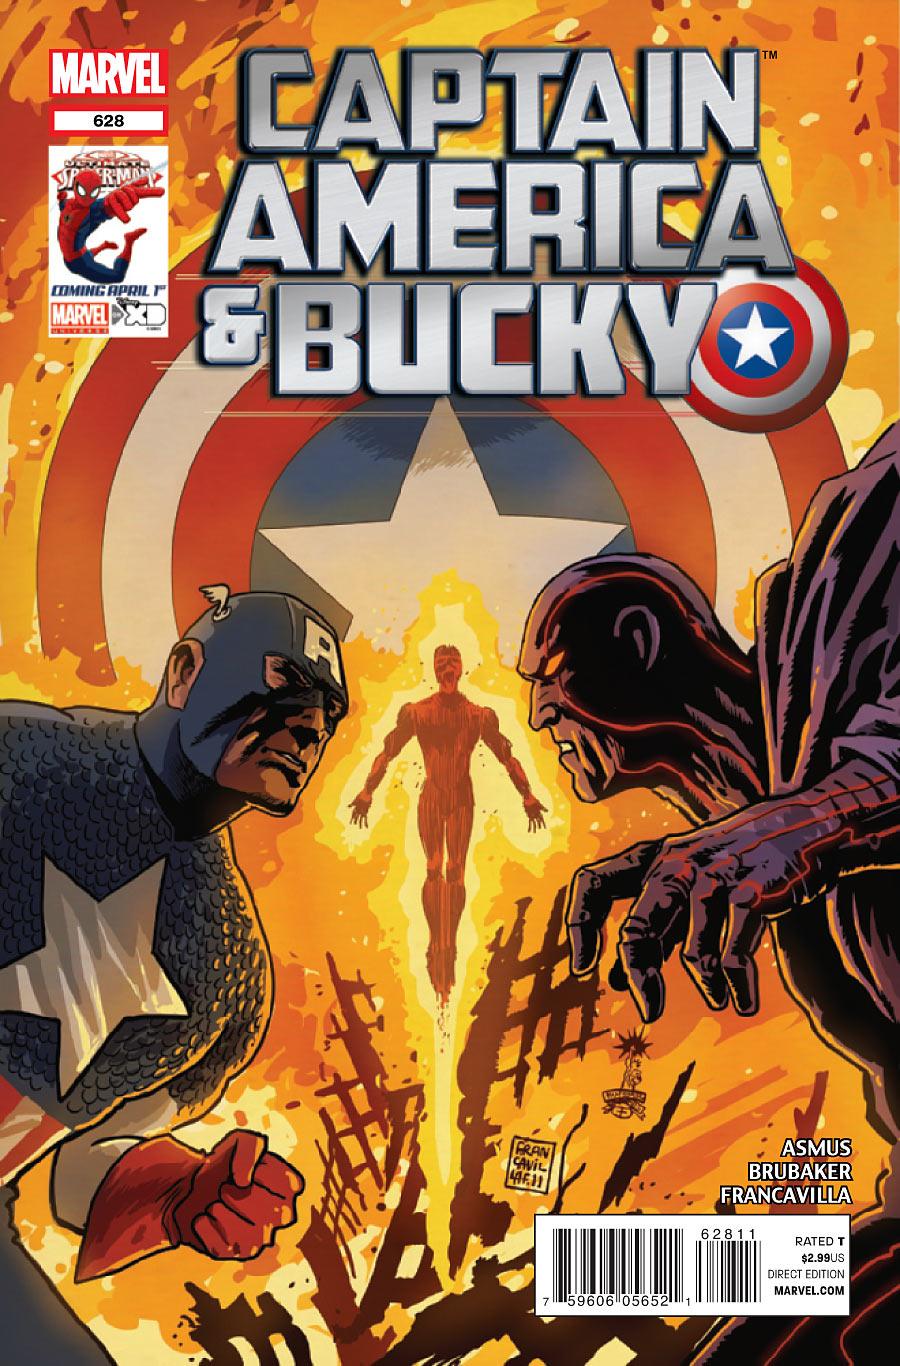 Captain America and Bucky Vol. 1 #628